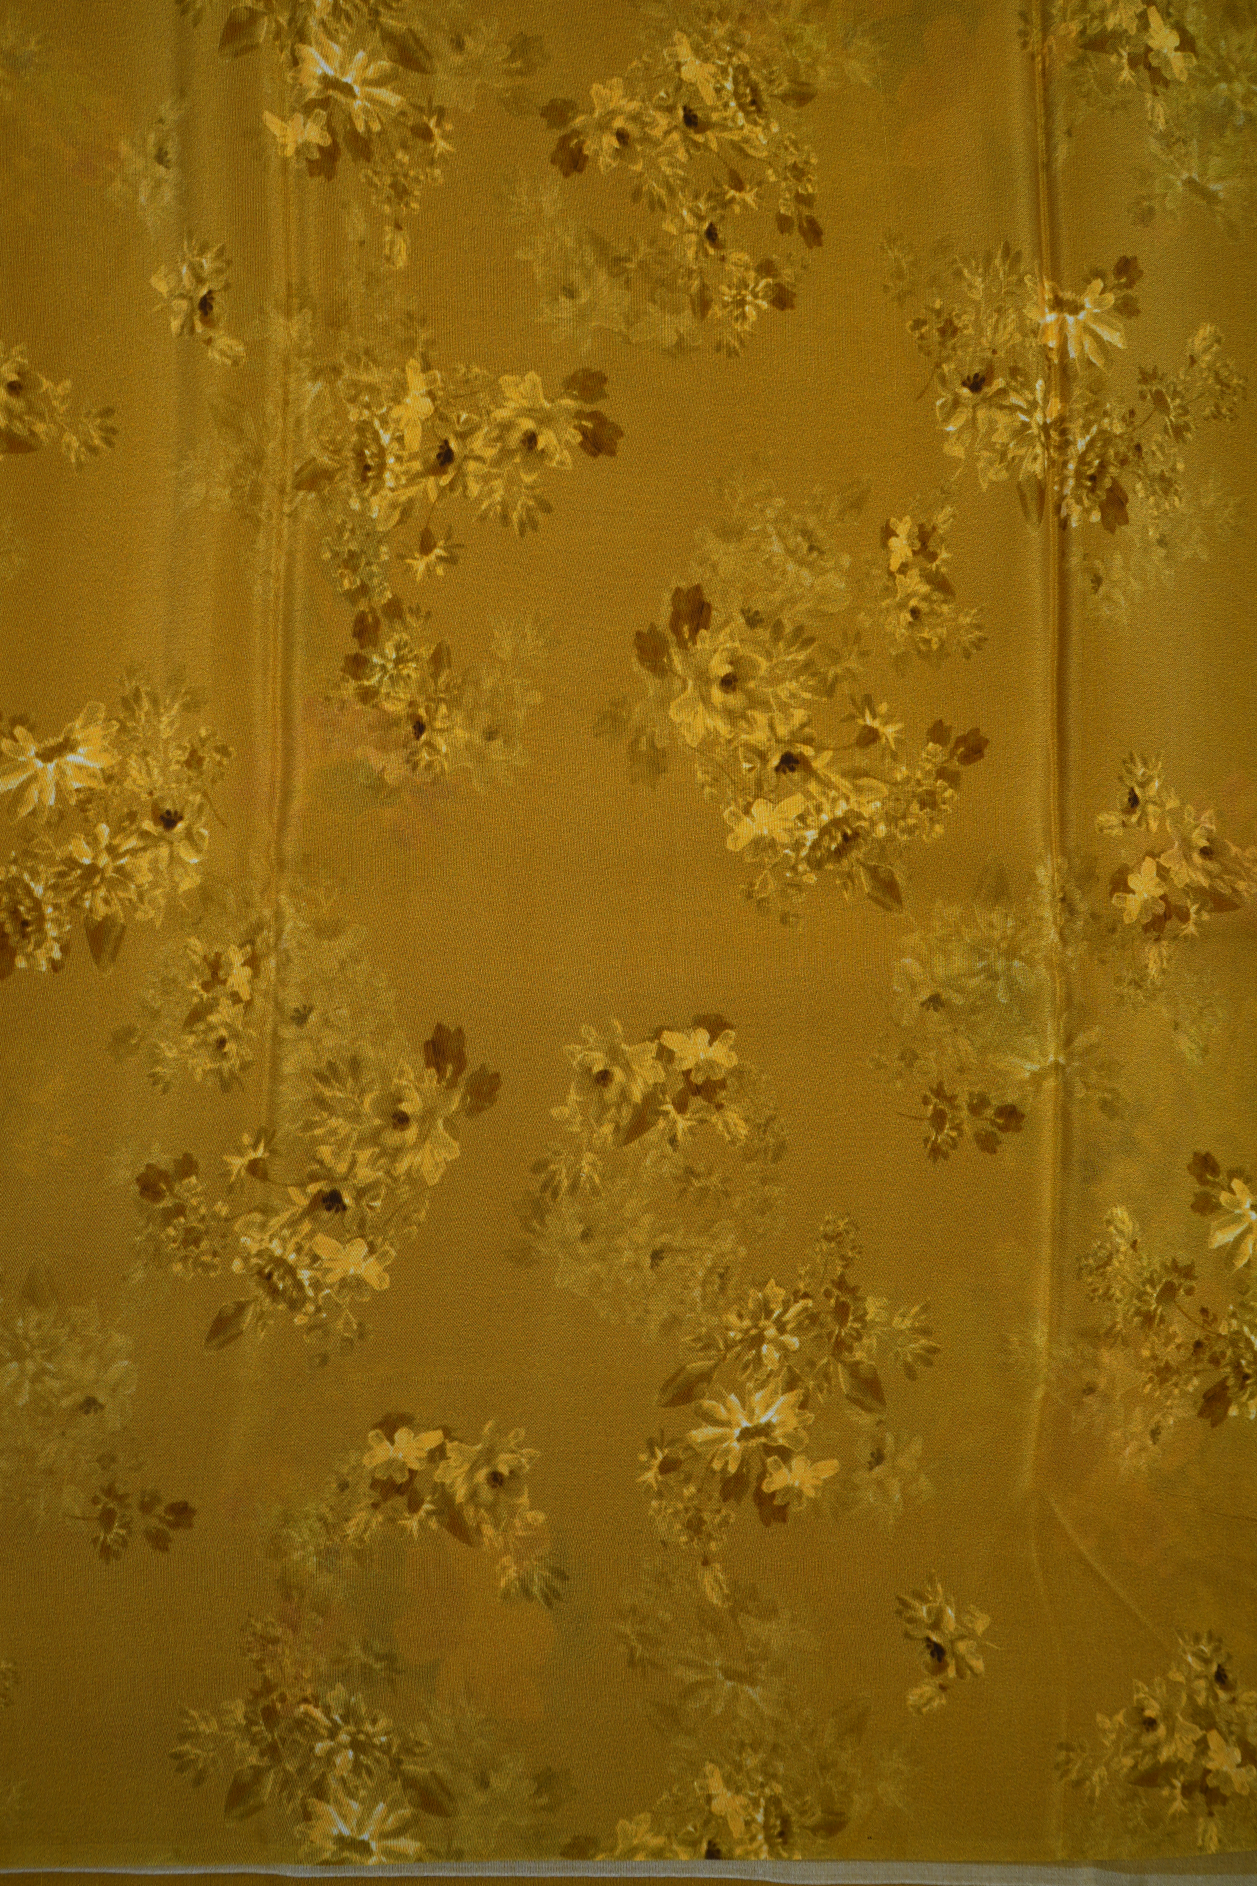 Floral Digital Printed Golden Yellow Crepe Saree